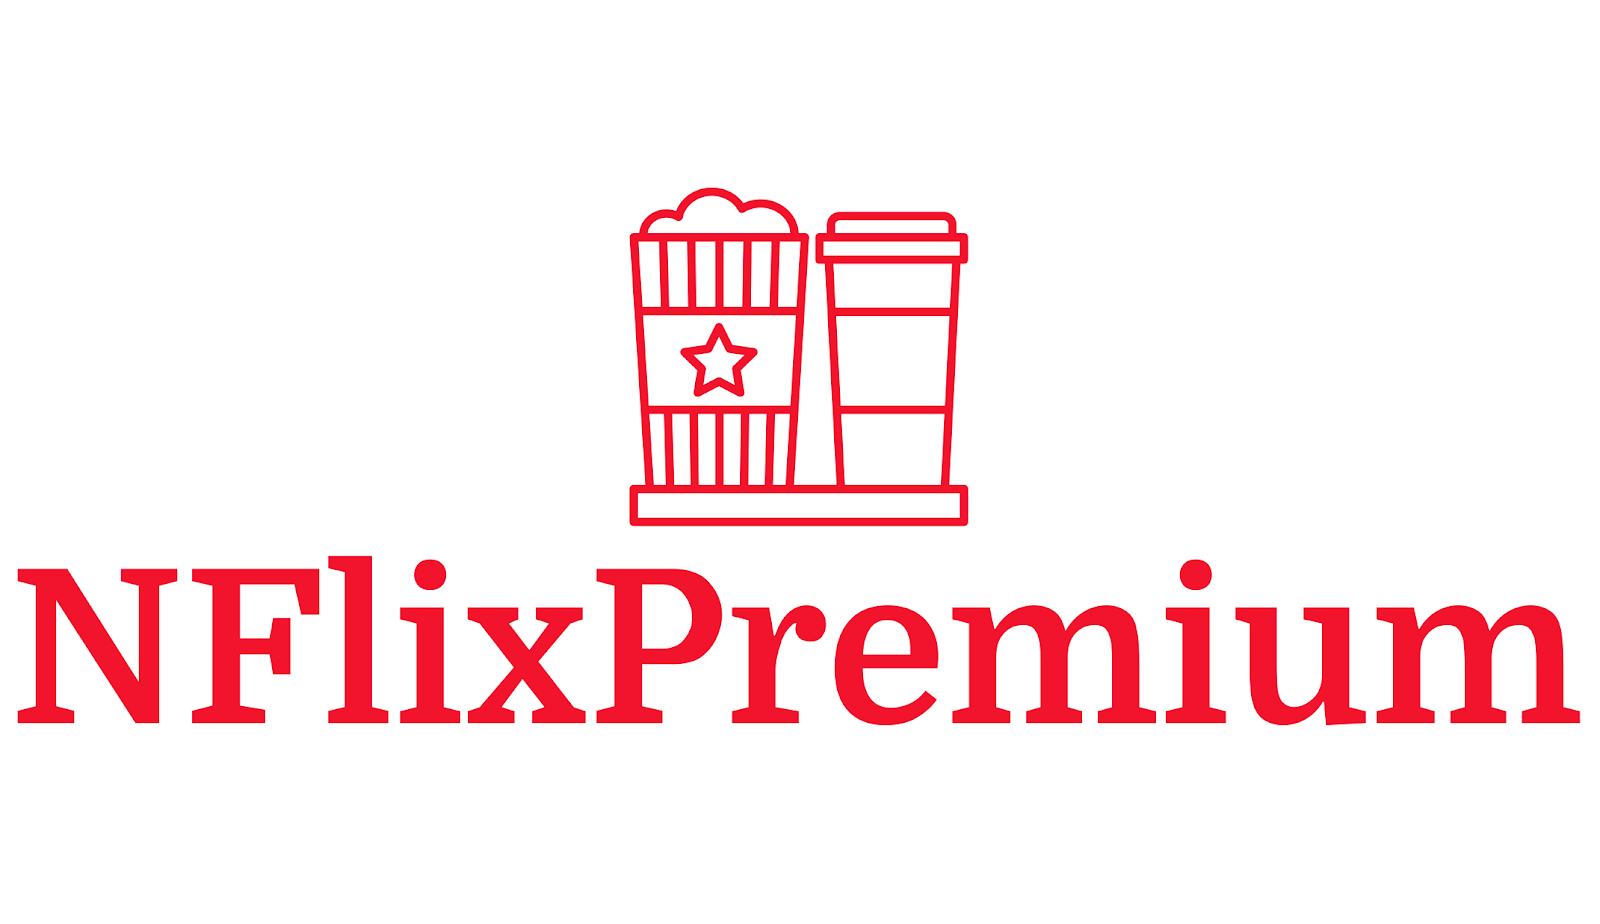 NFlixPremium - Free Netflix Premium